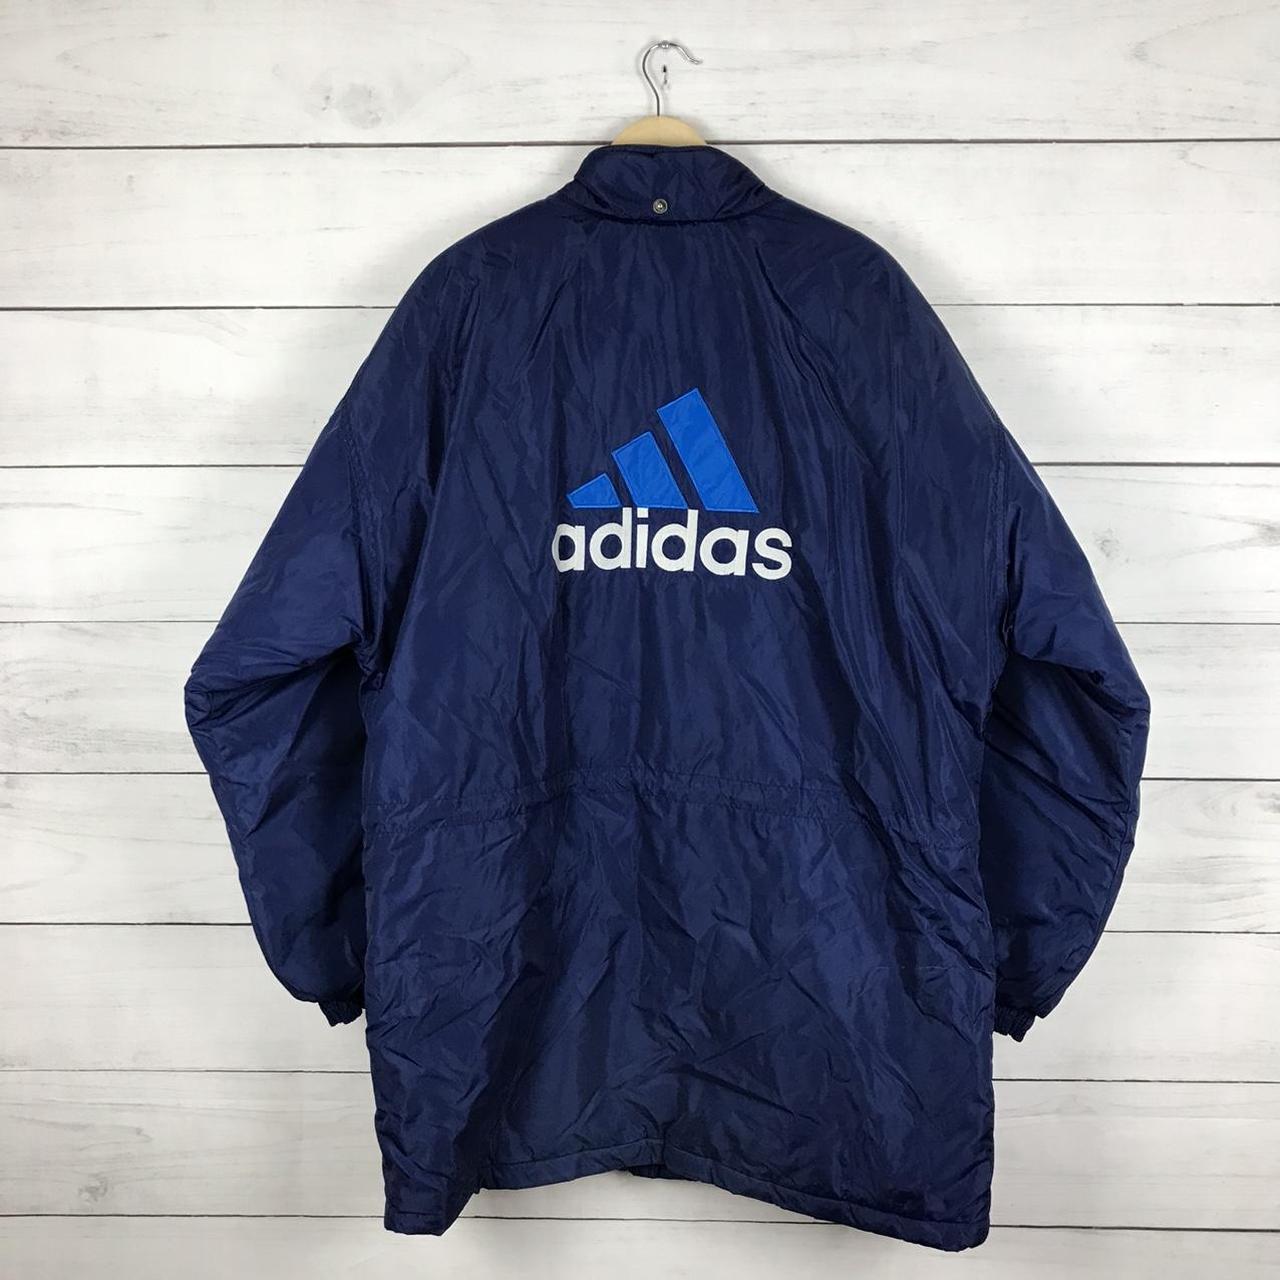 Vintage 1990s Adidas Embroidered Coat Puffer Jacket... - Depop